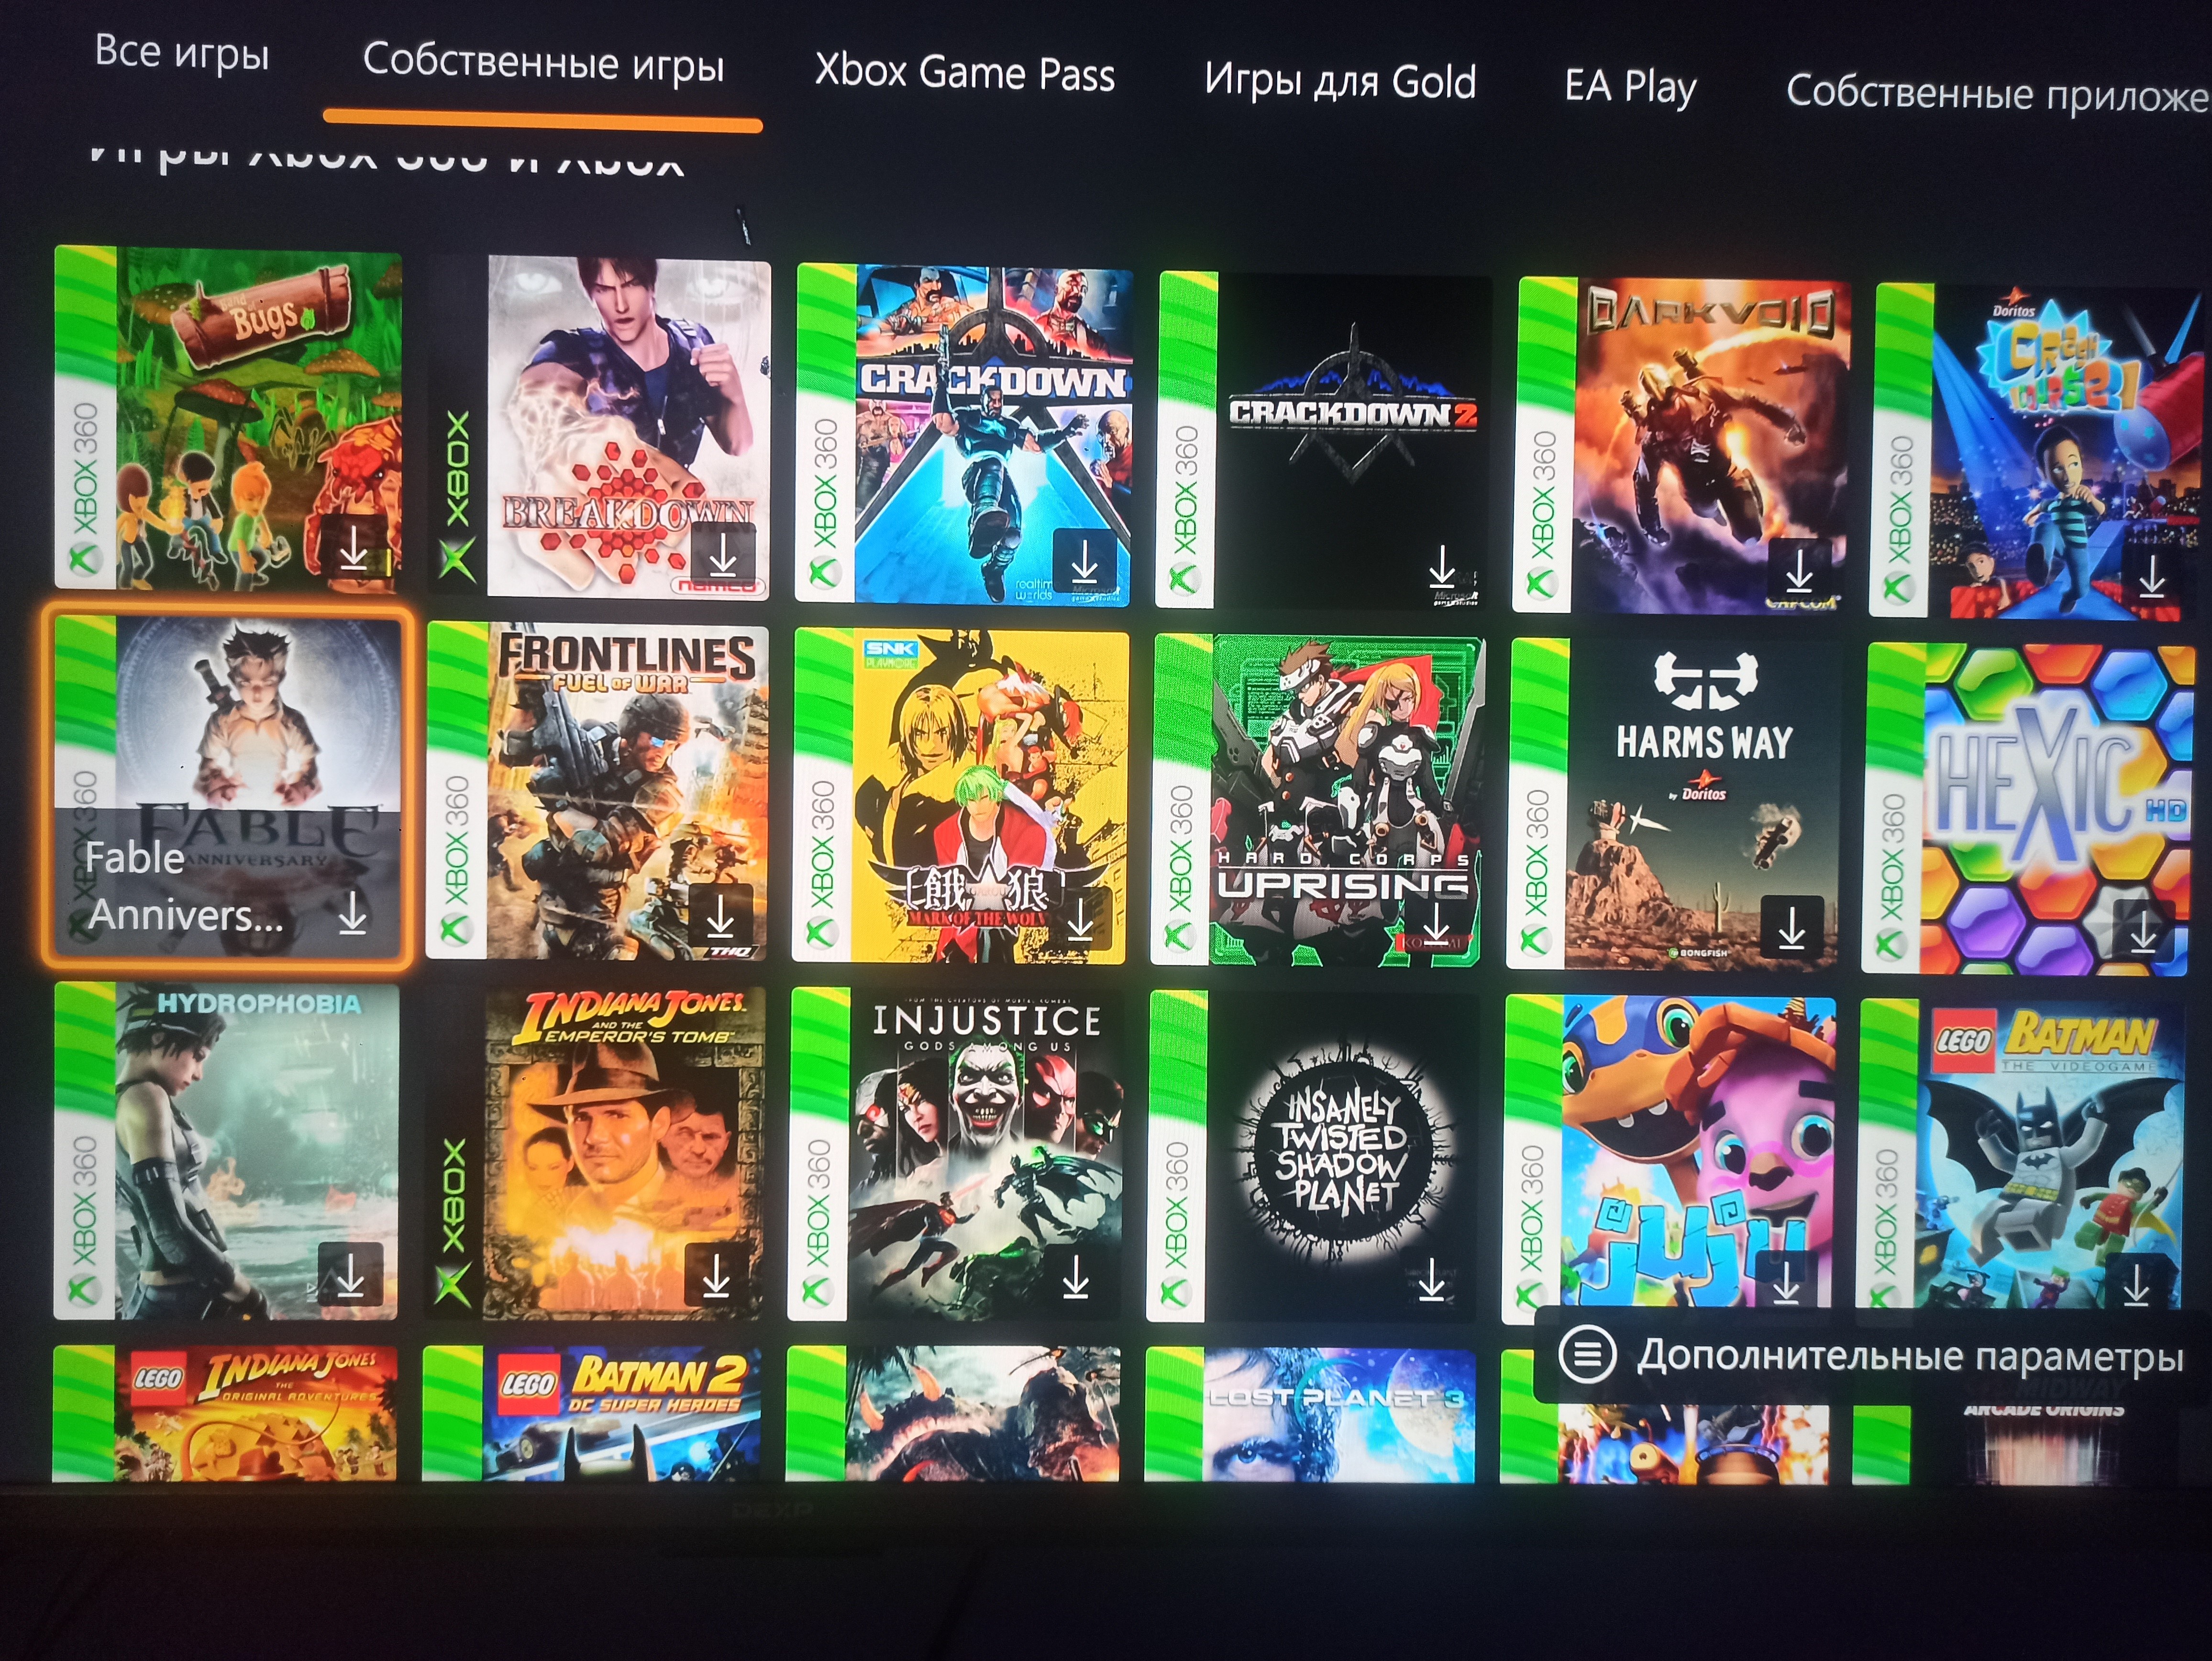 Купить аккаунт xbox one. Xbox аккаунт. Xbox аккаунт с играми превью. Обмен аккаунтами в Xbox. Учётные аписи Xbox.